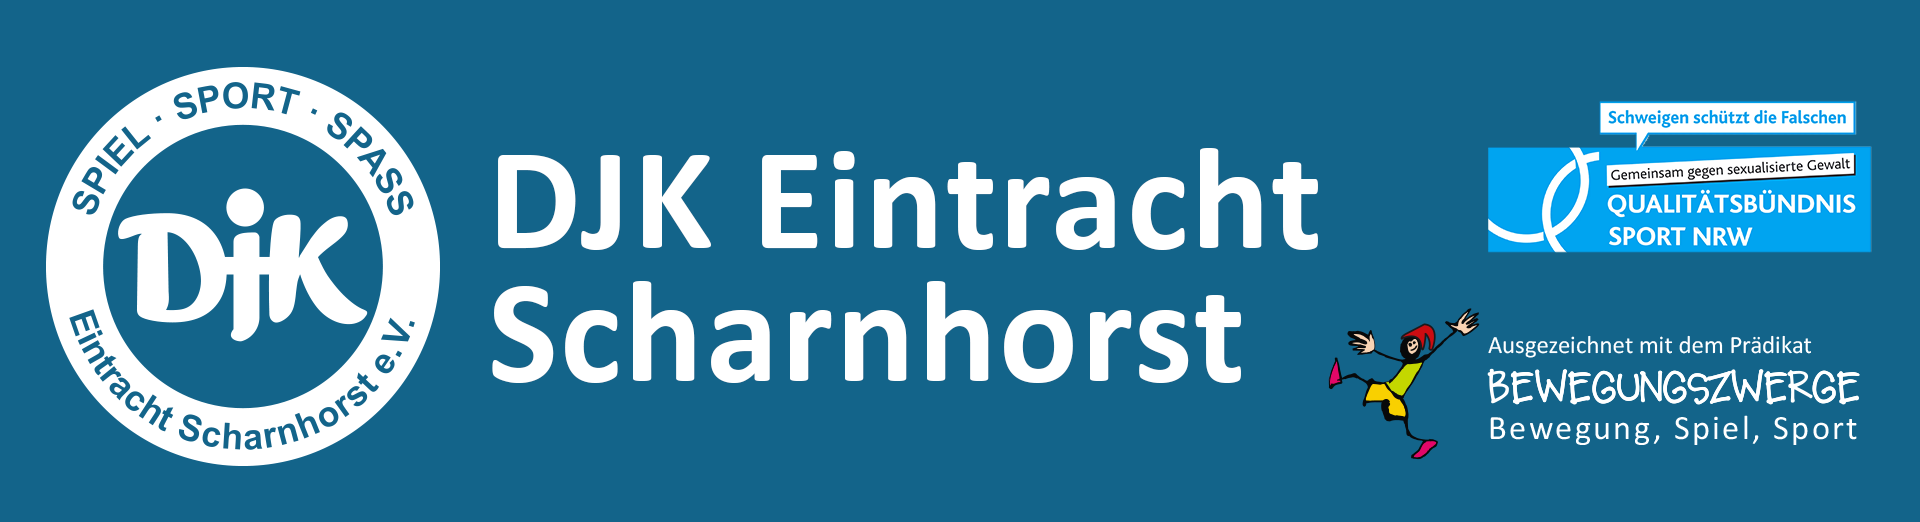 DJK Eintracht Scharnhorst